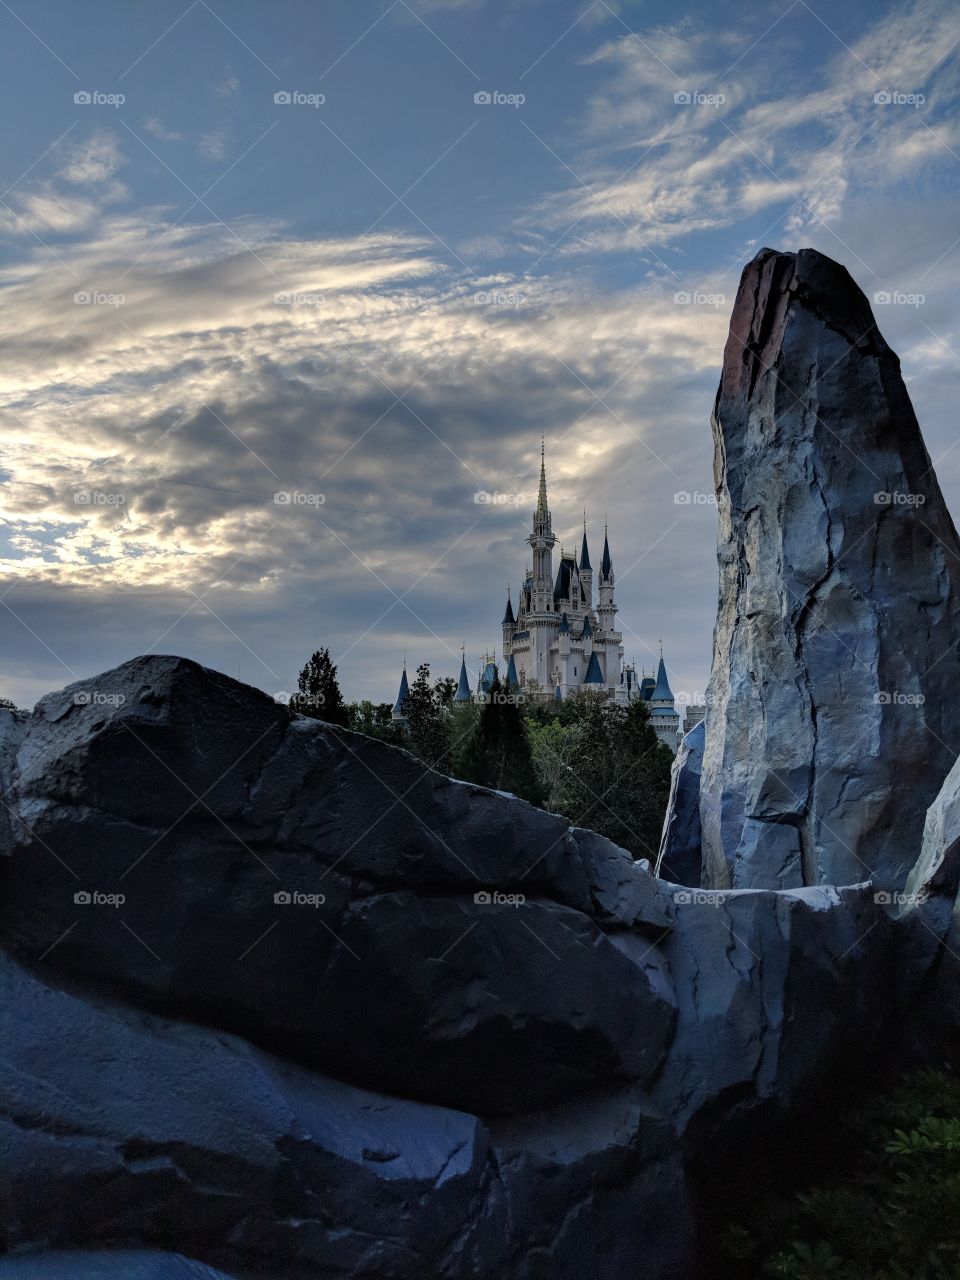 Cinderella's castle far off Mountain View magical Walt Disney World